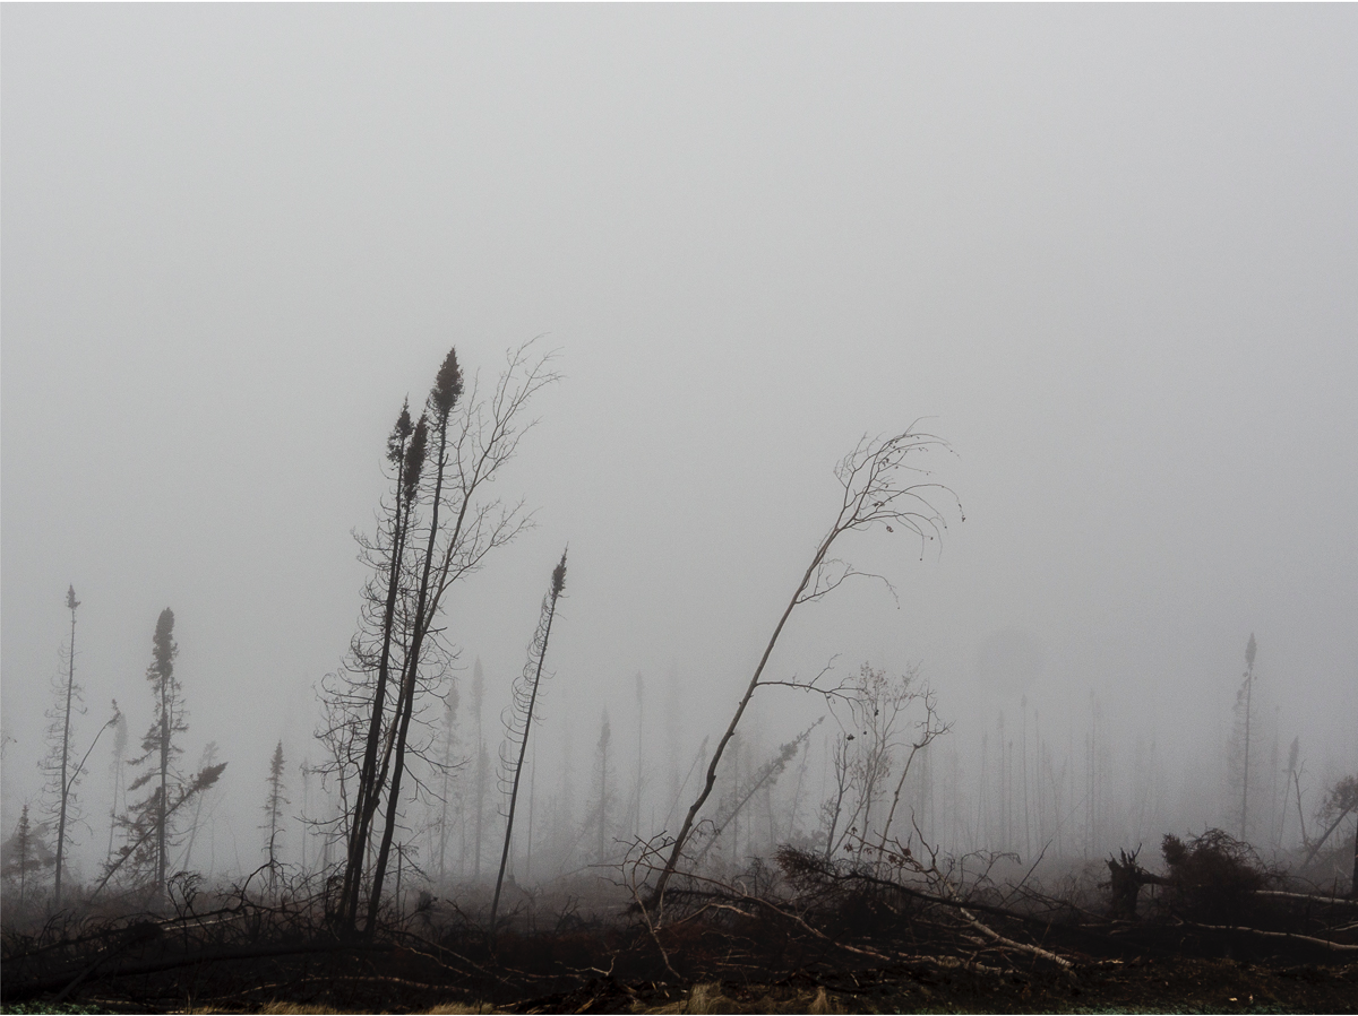 Burned trees set against a fog